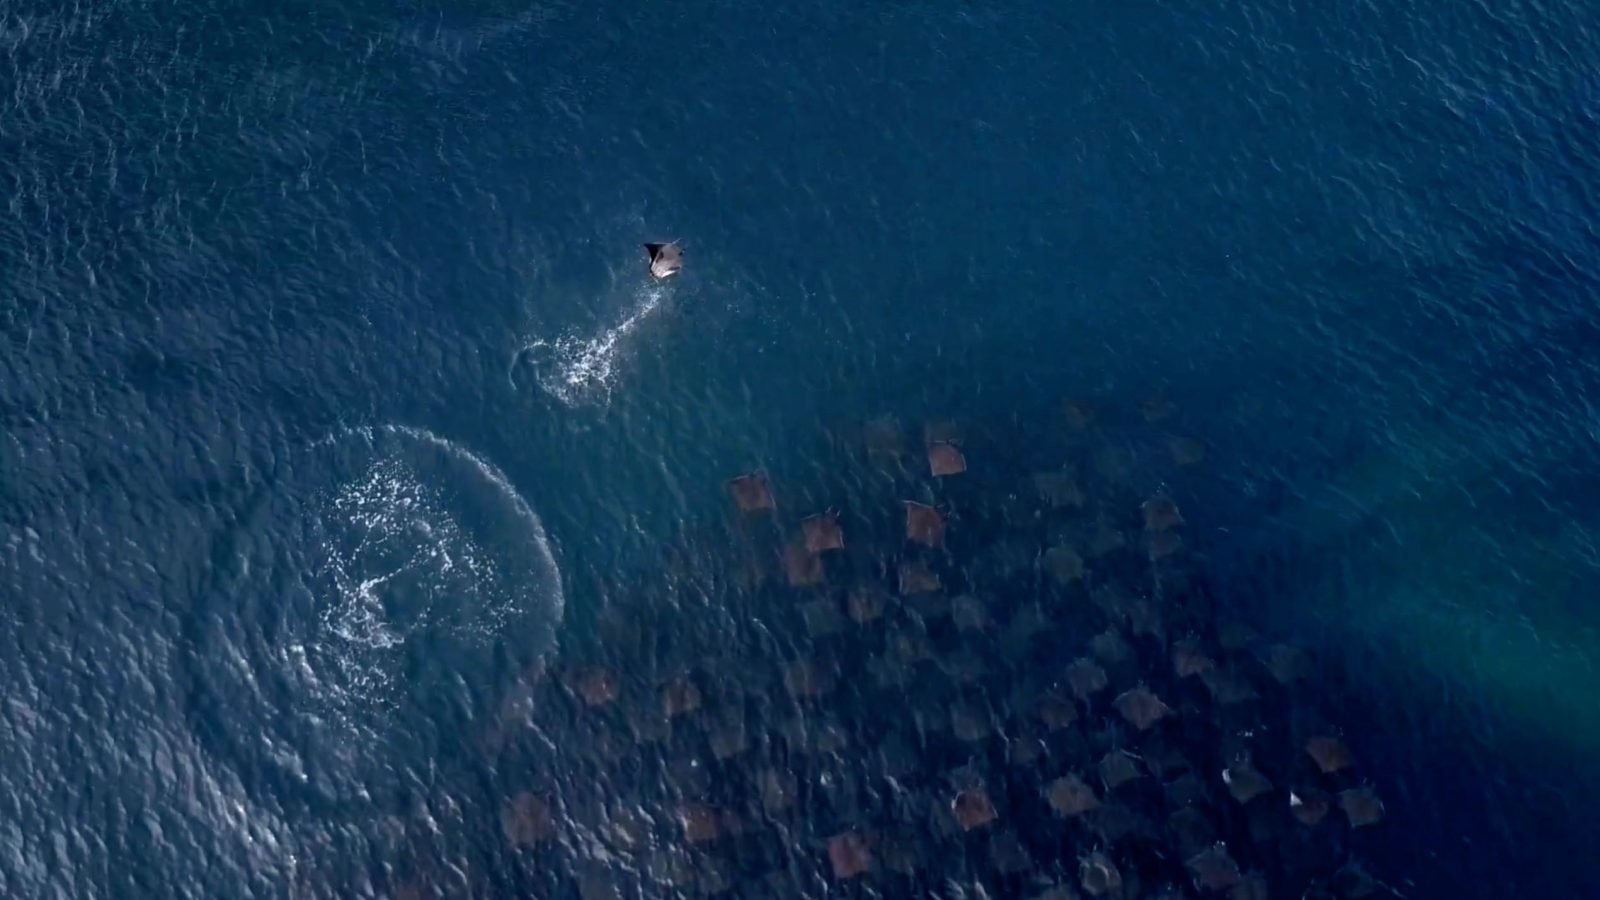 DroneRise - Mavic Pro captures flying Mobulas in the Sea of Cortes